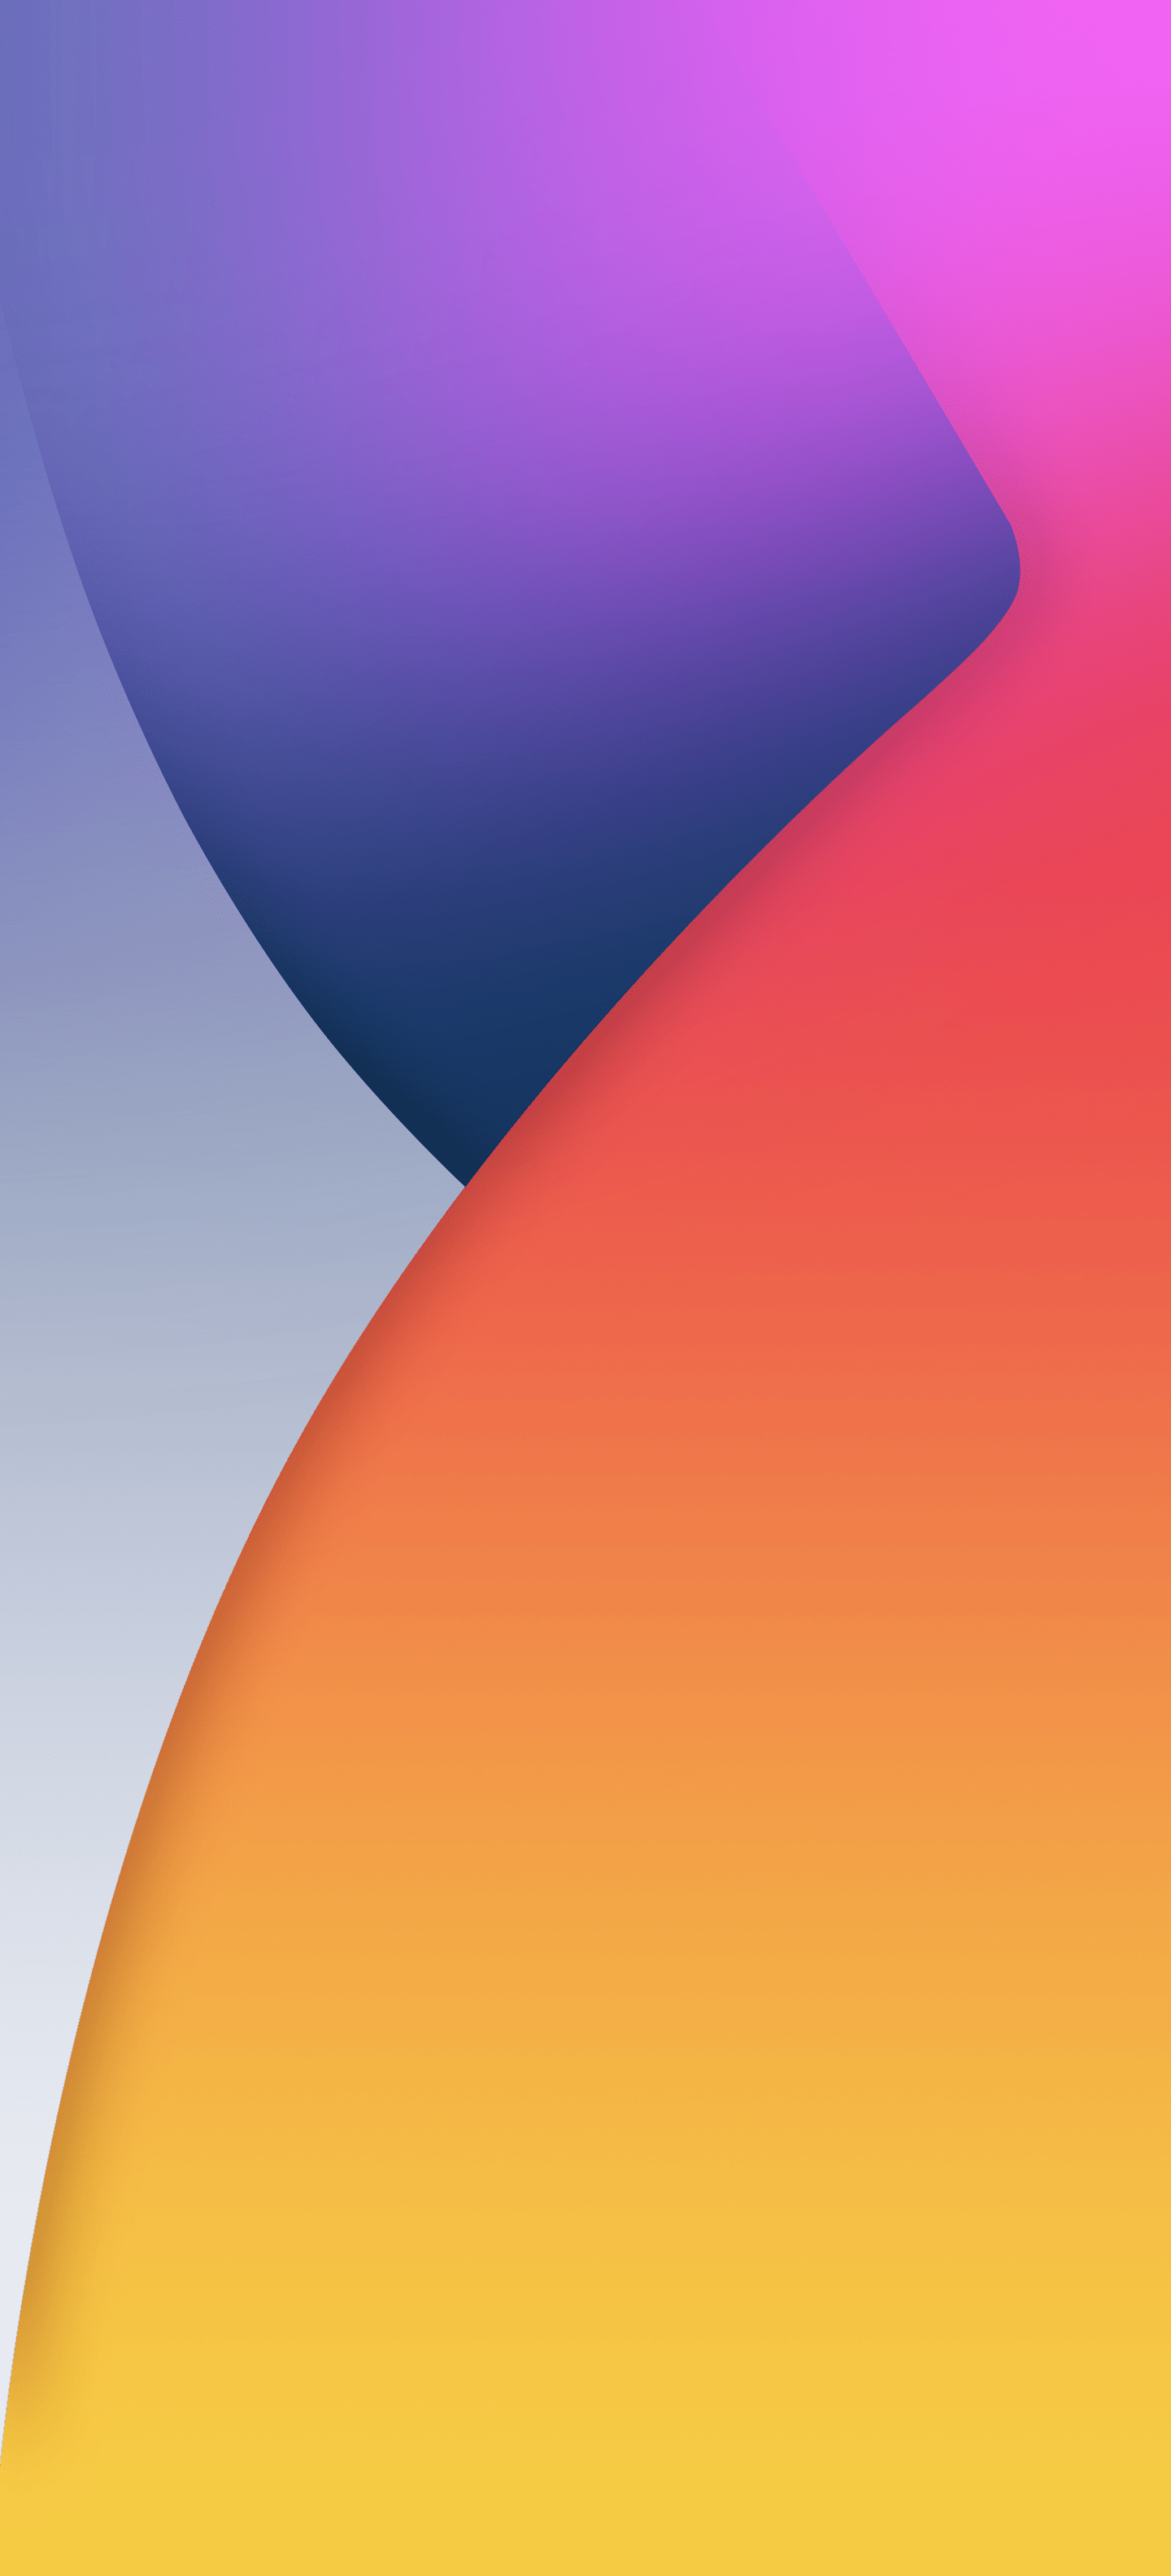 iOS 14 Wallpaper - EnJpg